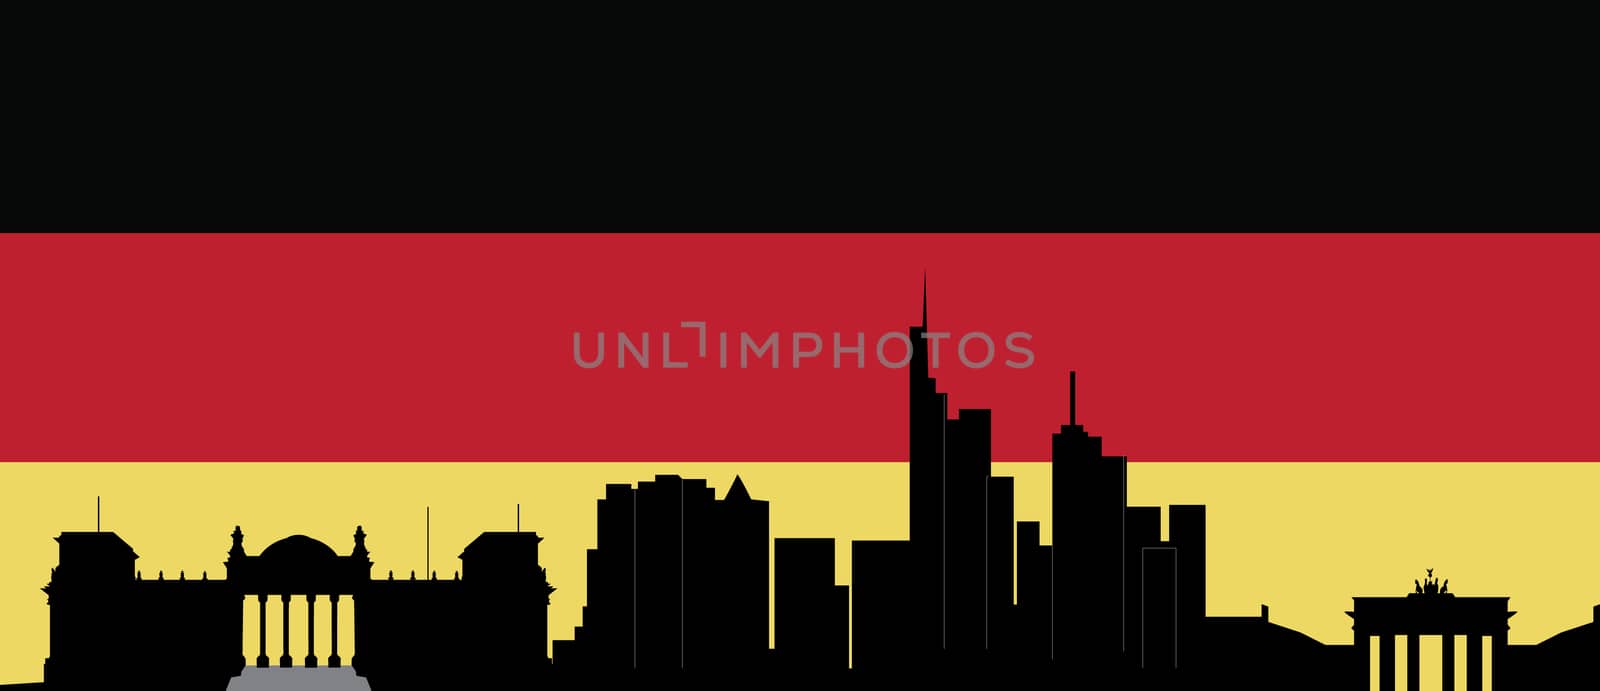 German city Berlin skyline